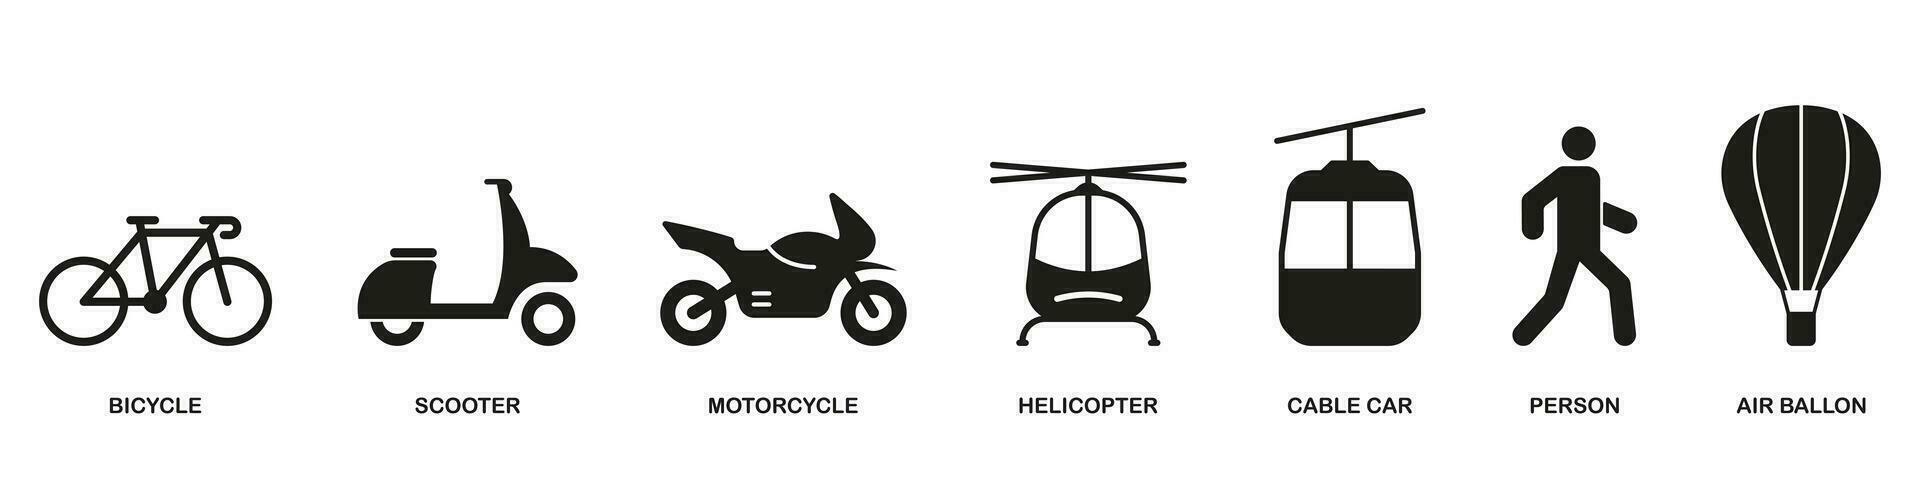 transporte silueta icono colocar. tráfico sólido signo. motocicleta, bicicleta, ciclomotor, scooter, cable auto, helicóptero pictograma. entrega Servicio vehículo símbolo recopilación. aislado vector ilustración.